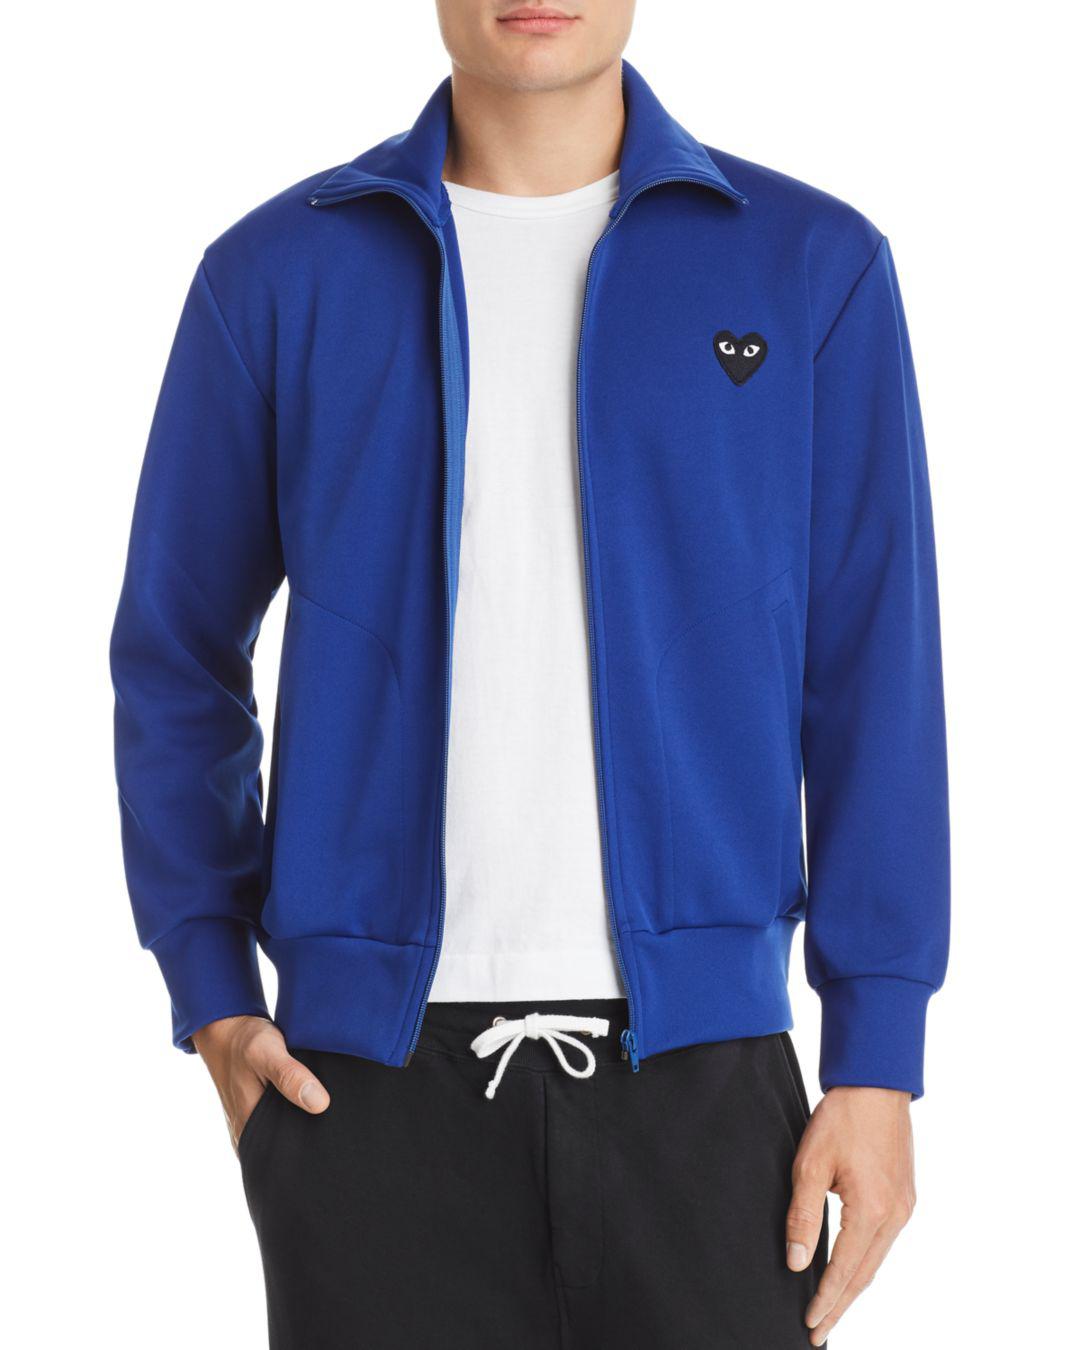 Blue track jacket